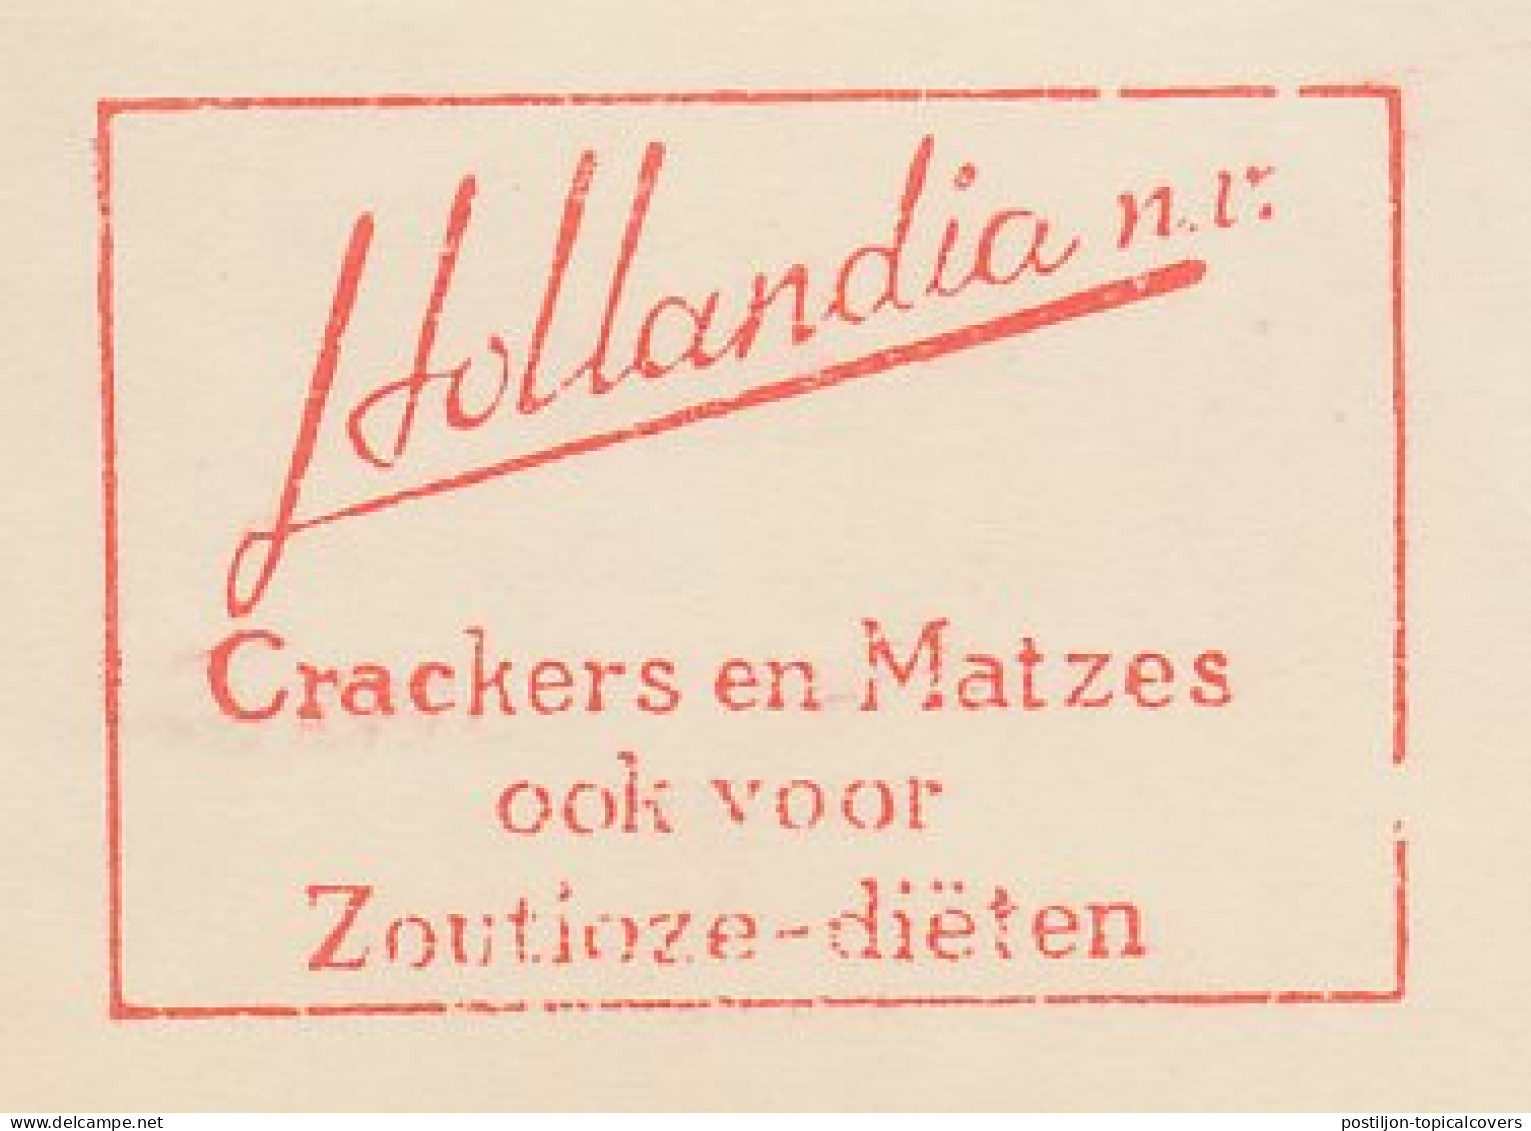 Meter Cut Netherlands 1983 Matzes - Crackers - Pesach - Salt Free - Unclassified